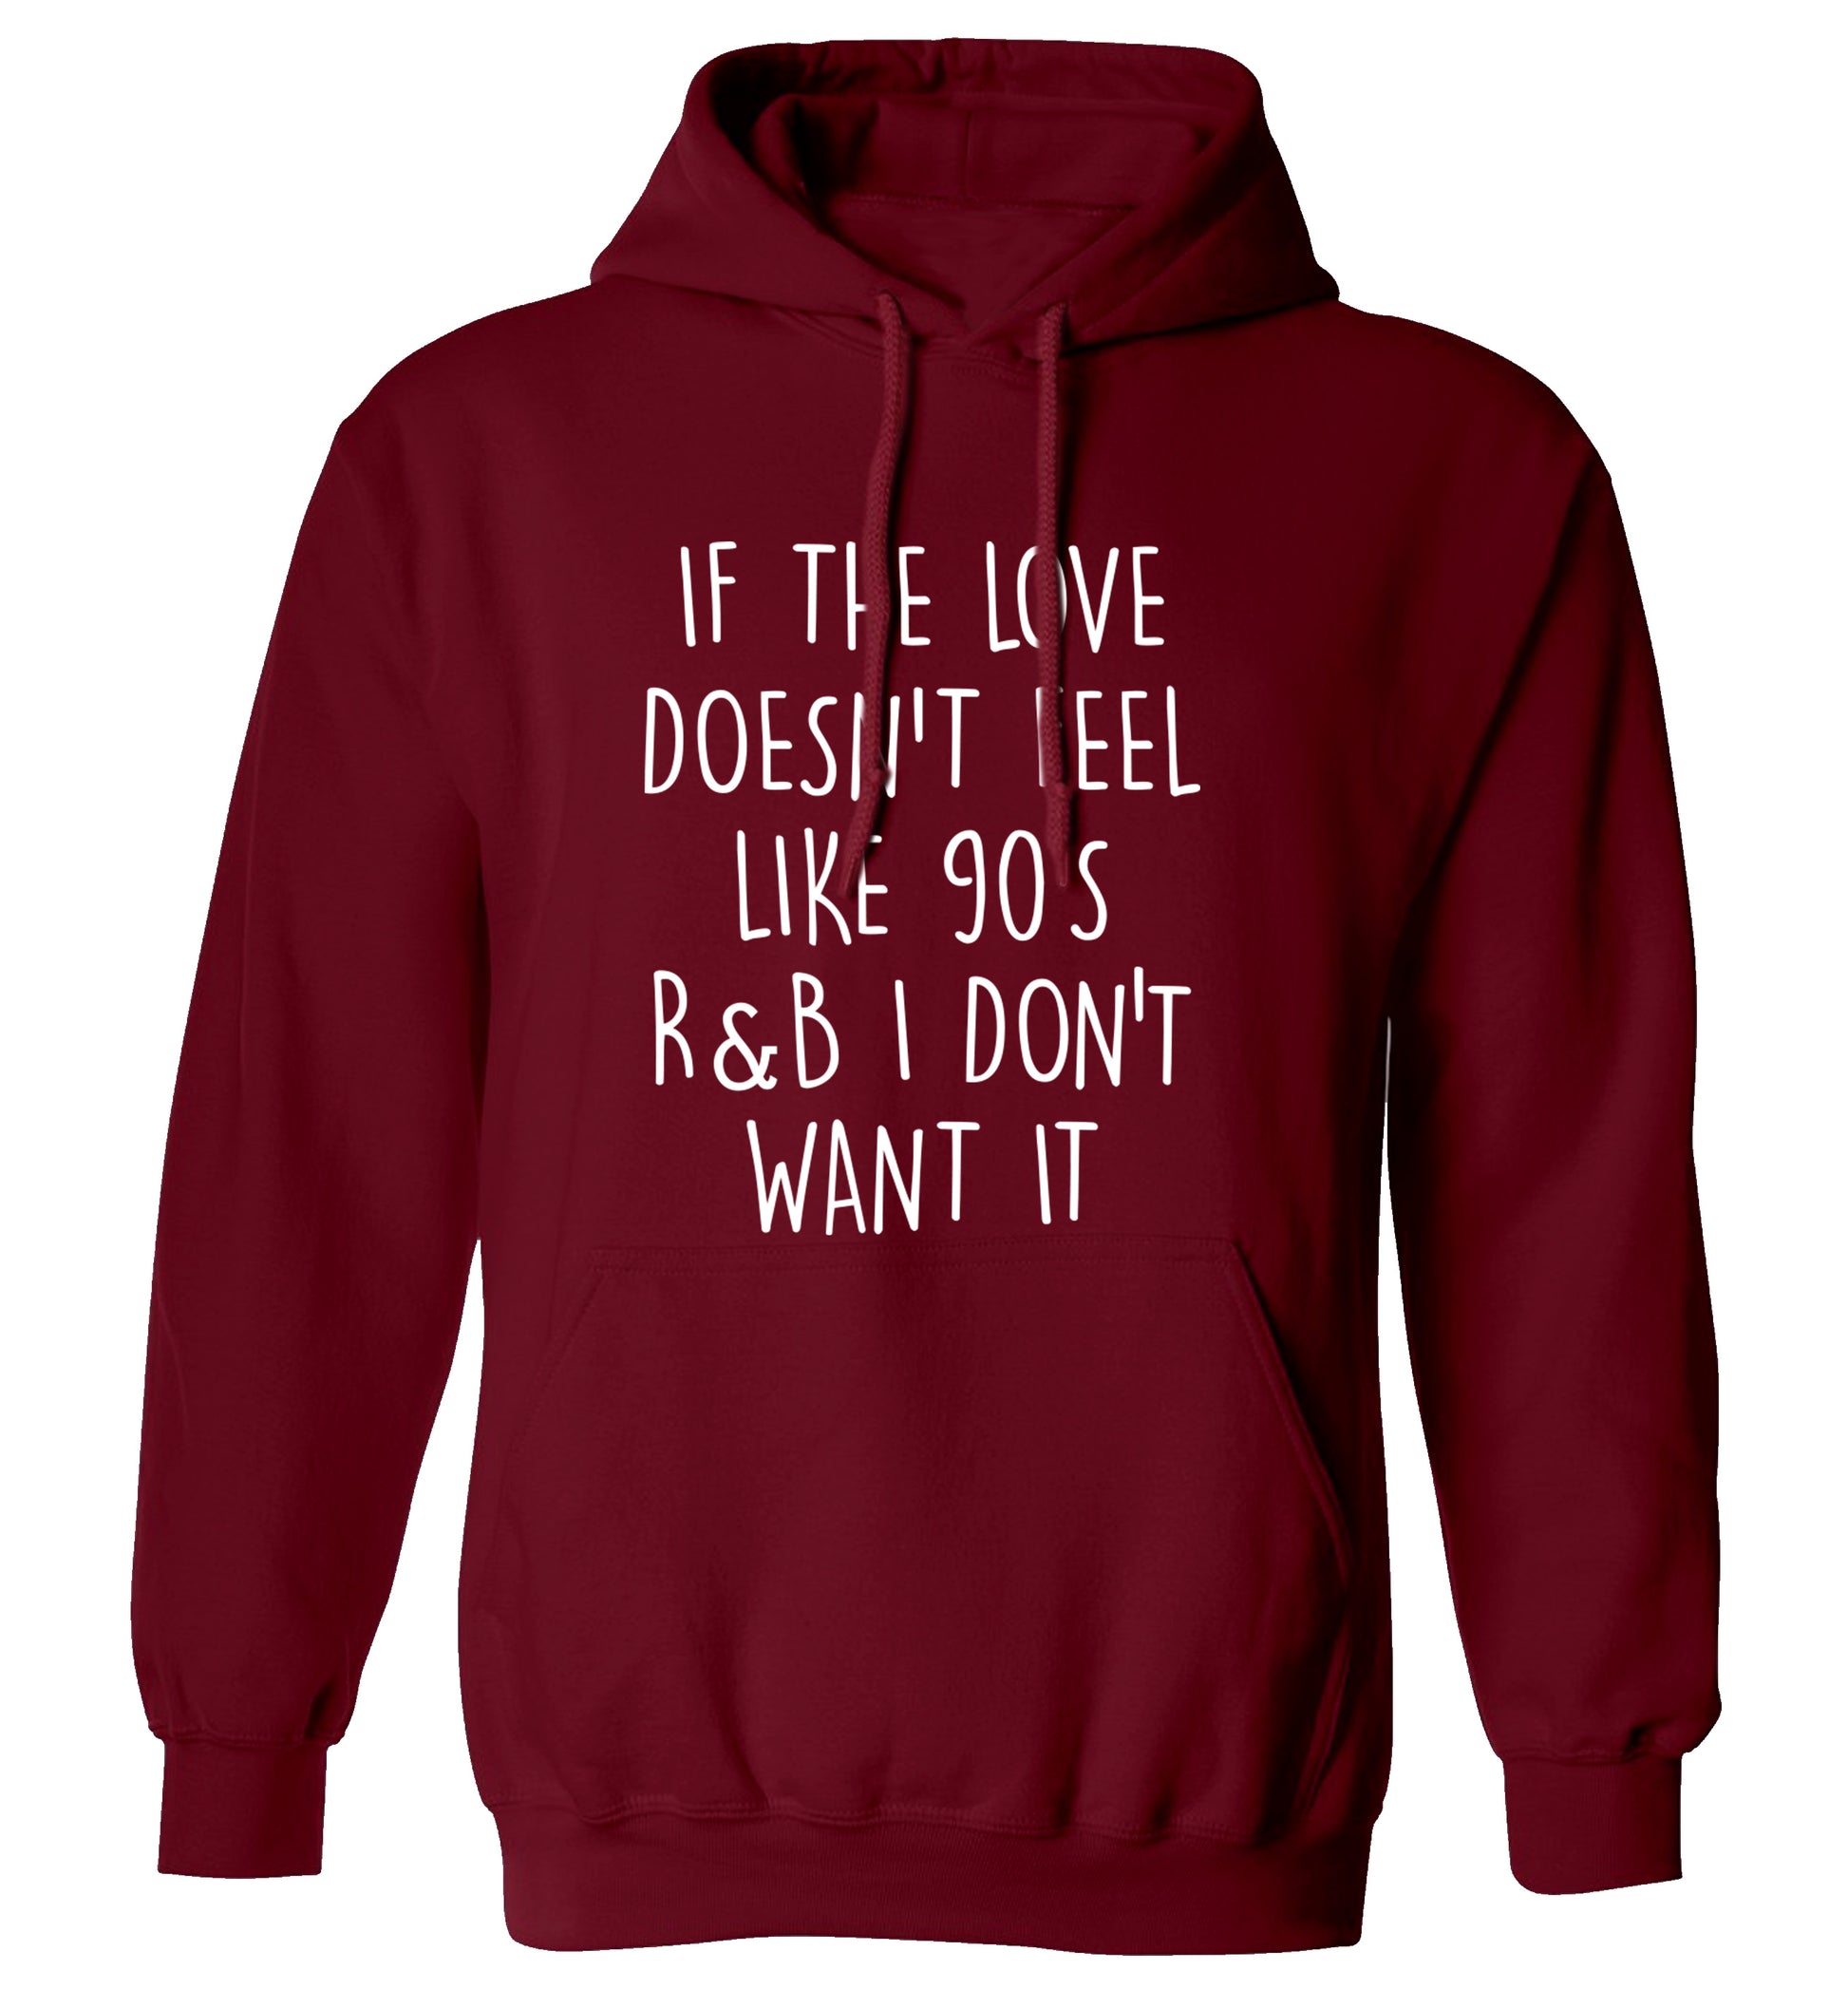 If the love doesn't feel like 90's R&B I don't want it adults unisex maroon hoodie 2XL